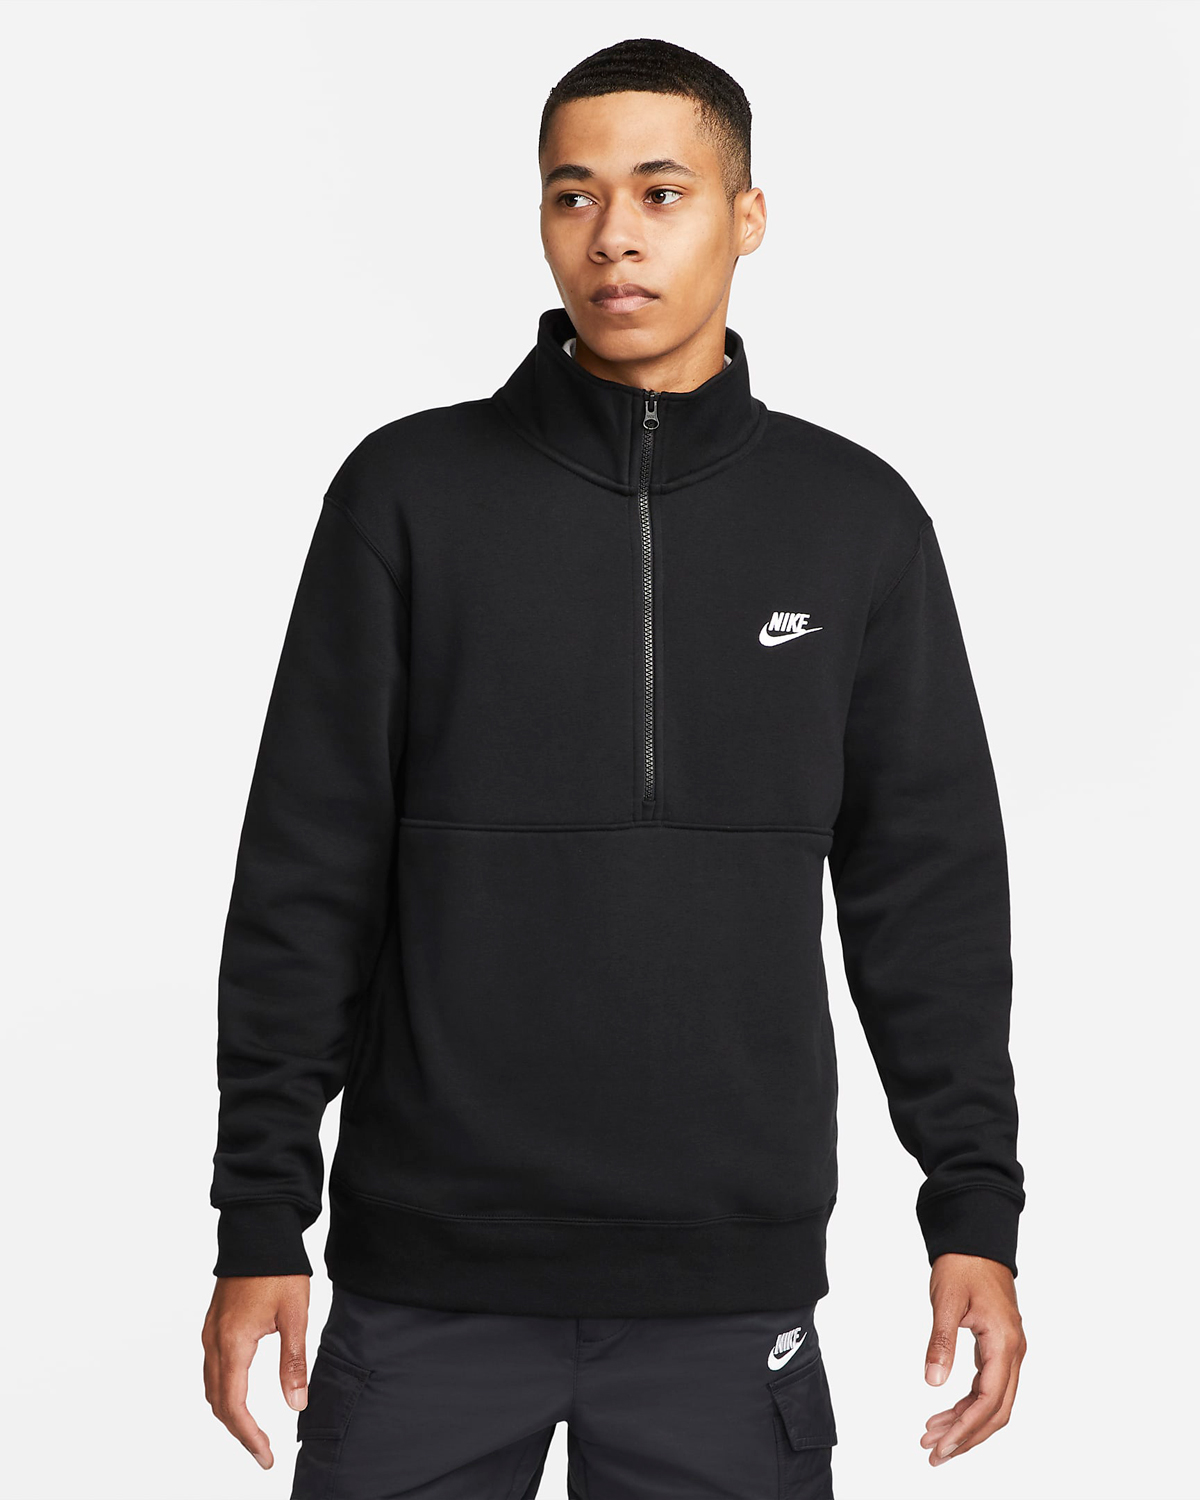 Nike-Club-Fleece-Half-Zip-Pullover-To-Black-White